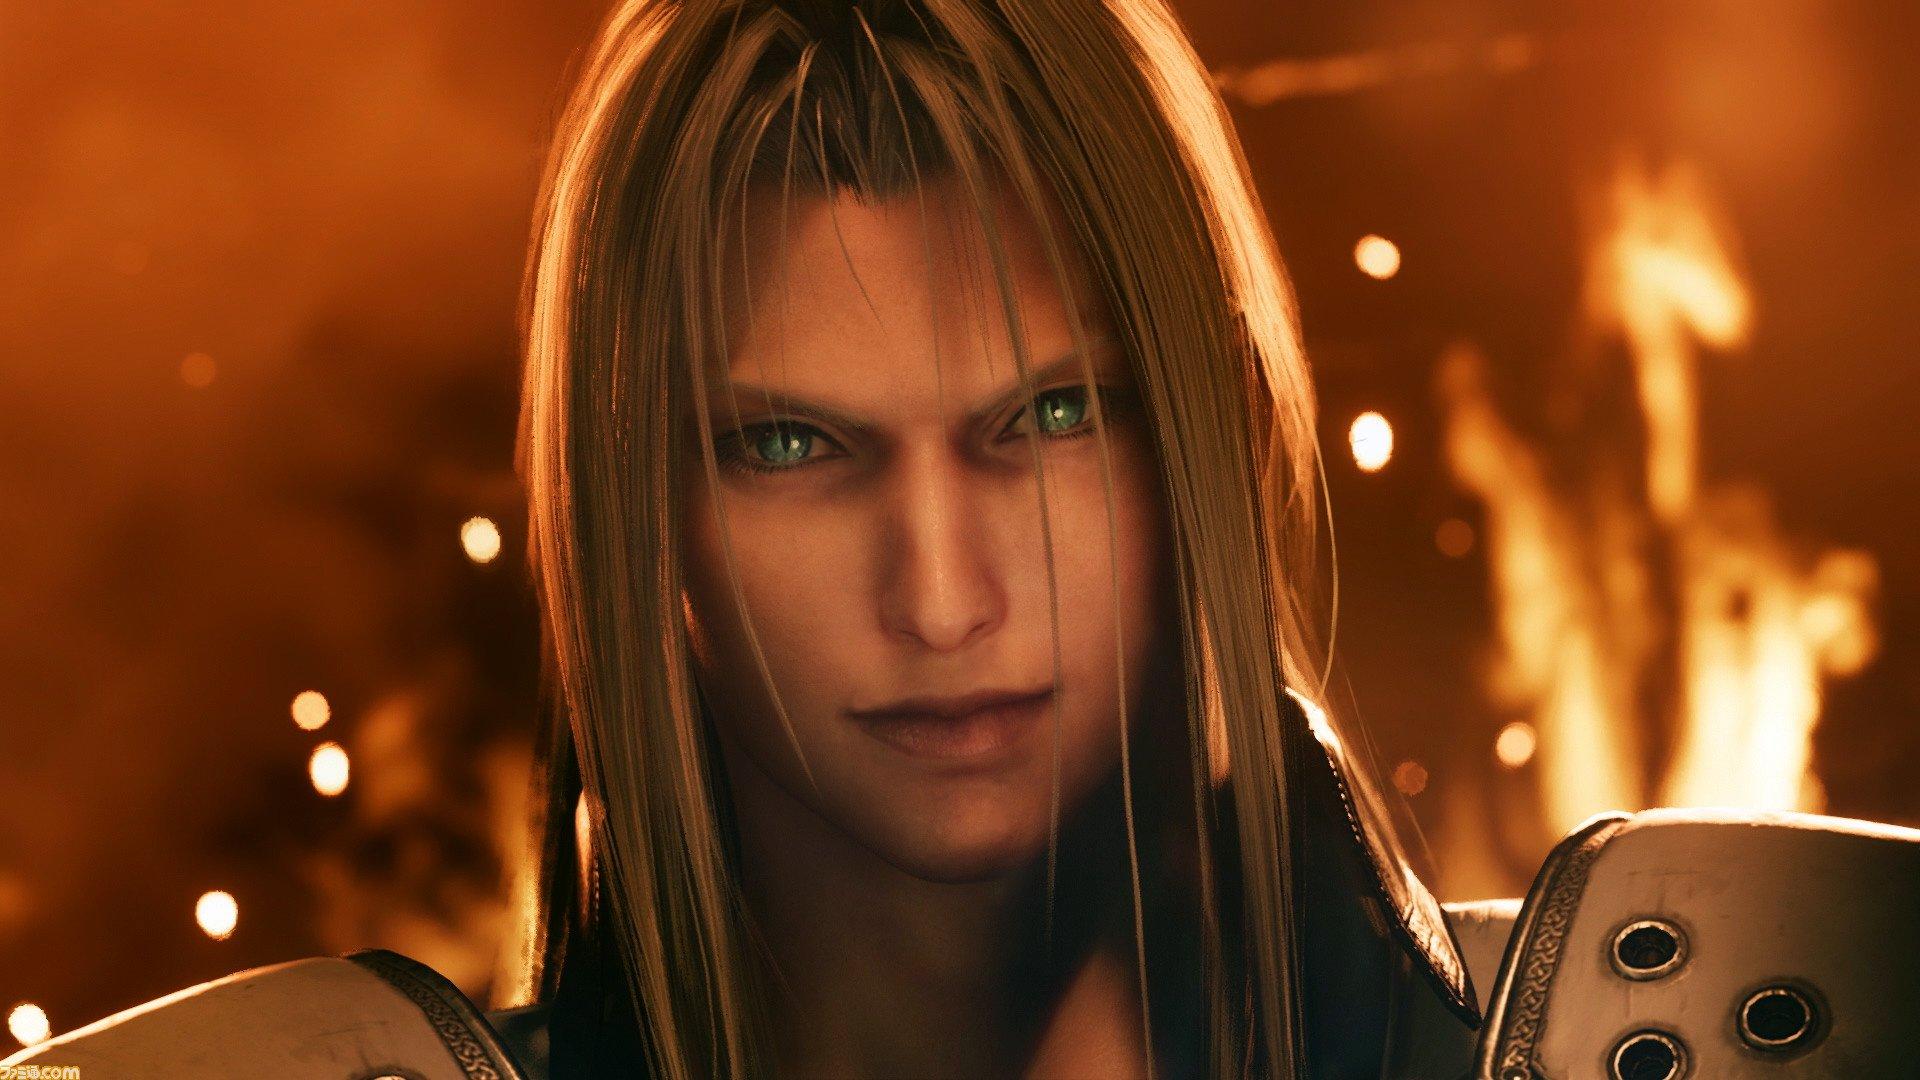 Gallery: New Final Fantasy VII Remake Screenshots Show Sephiroth